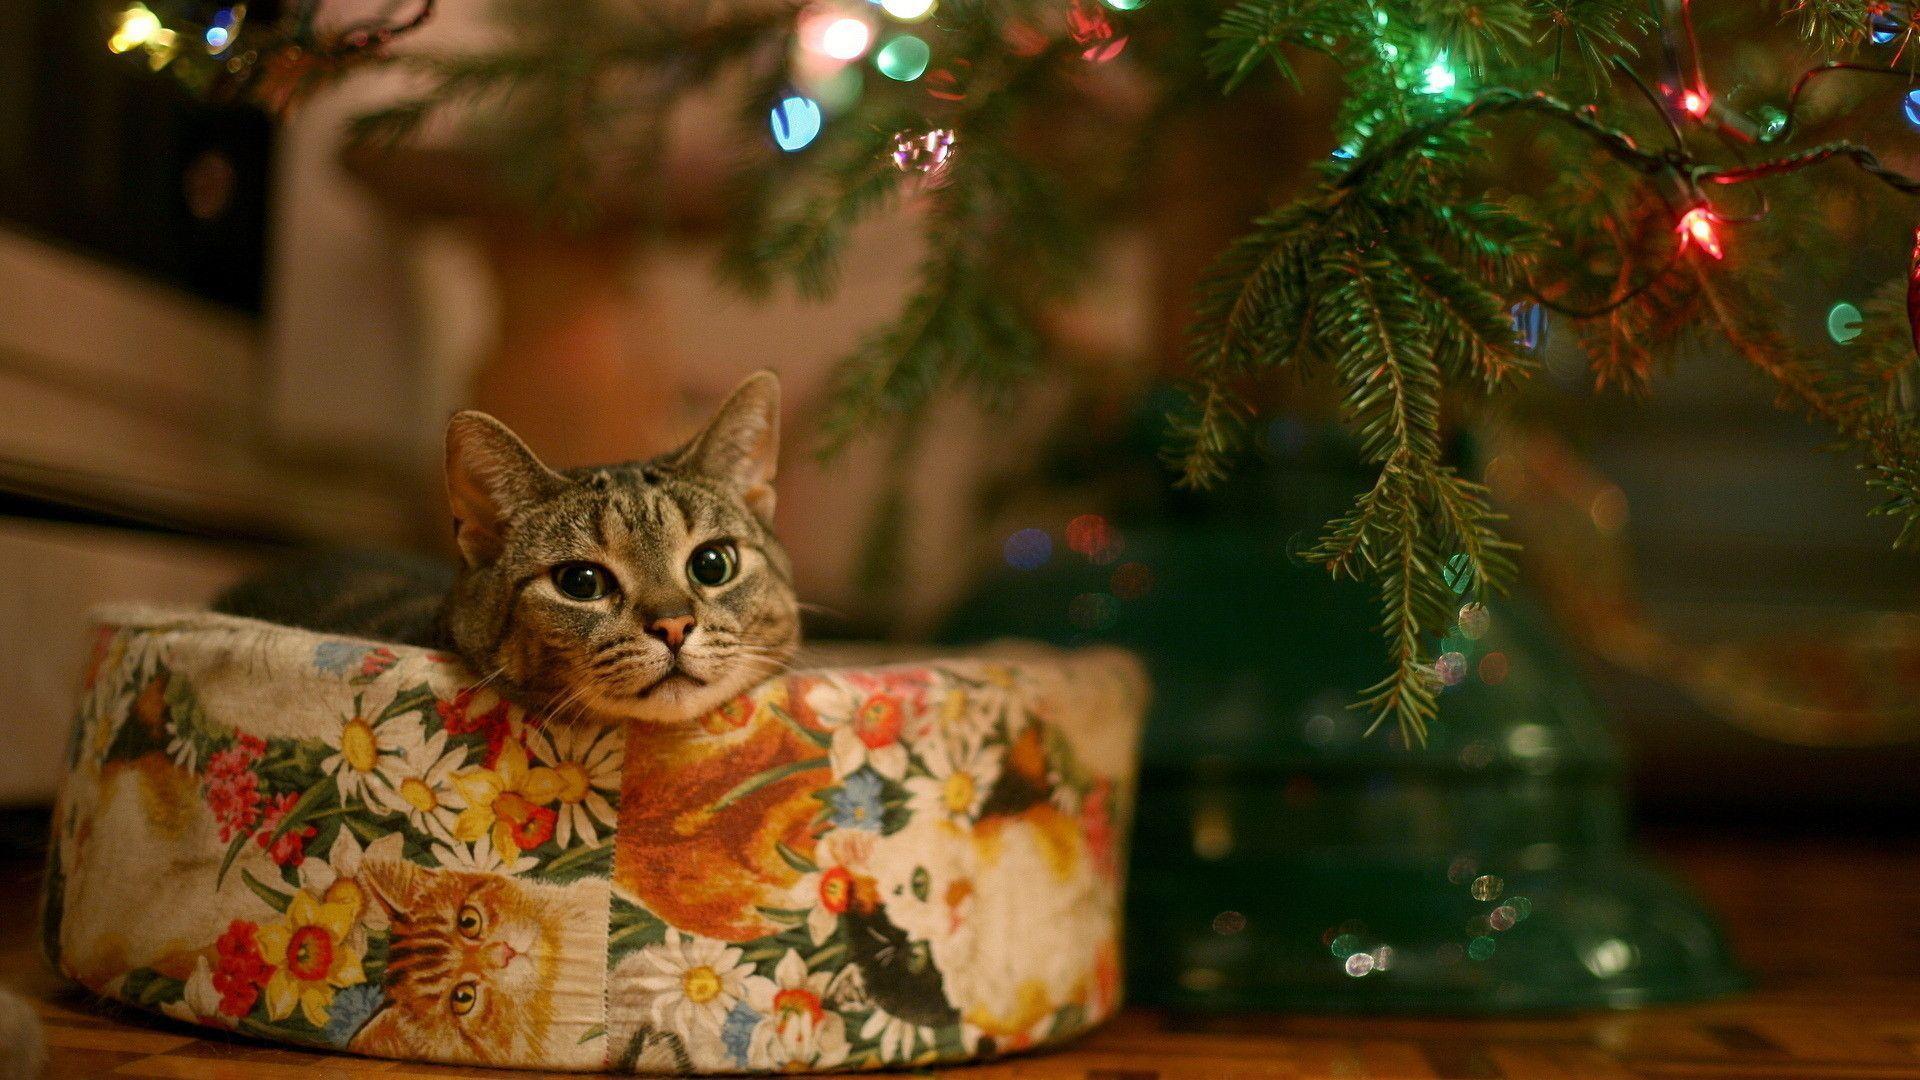 HD Christmas Cats Wallpaper Download